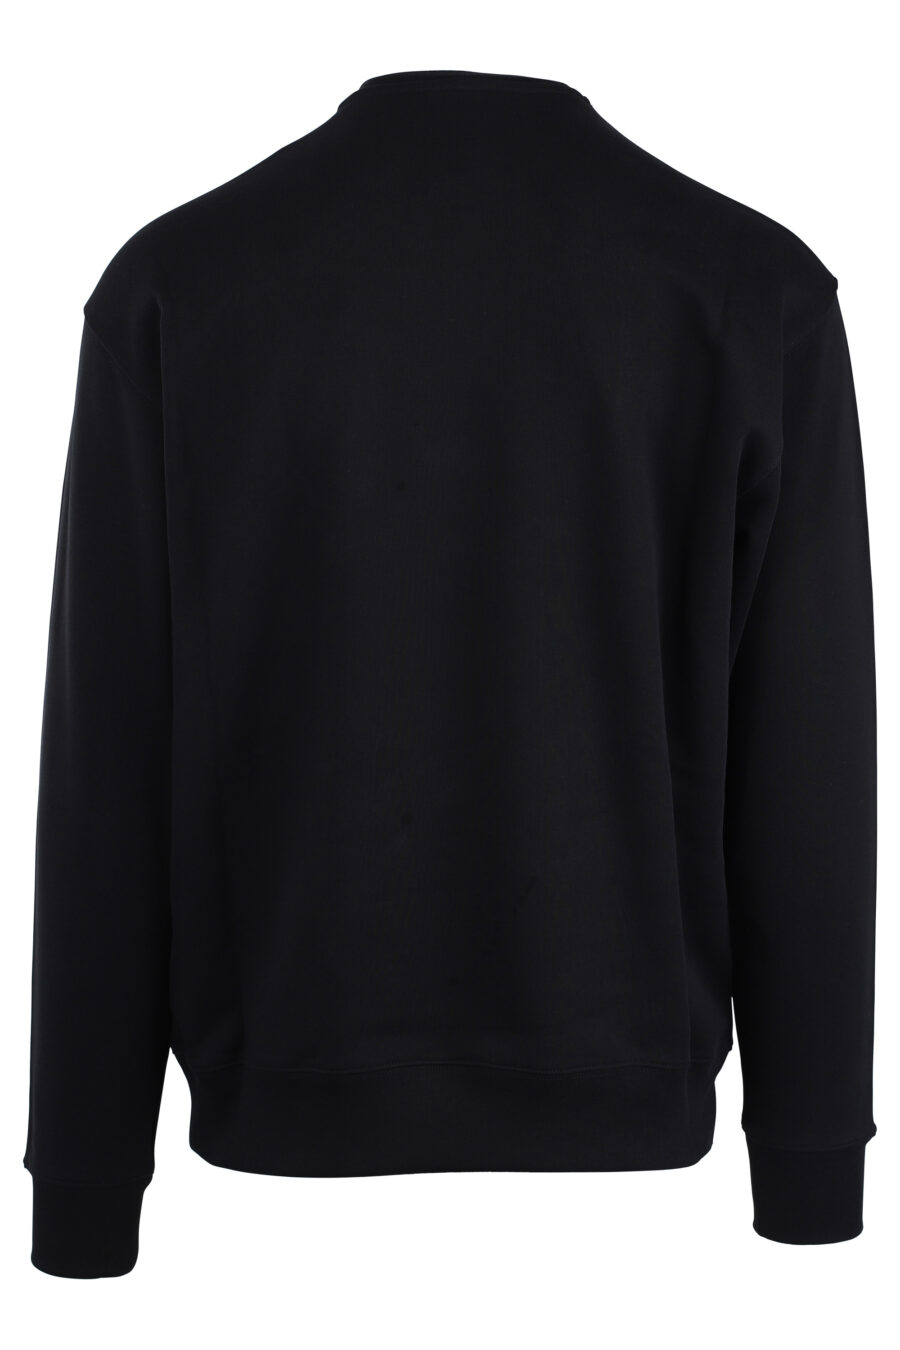 Black sweatshirt with monochrome rubber bear maxilogo - IMG 1668